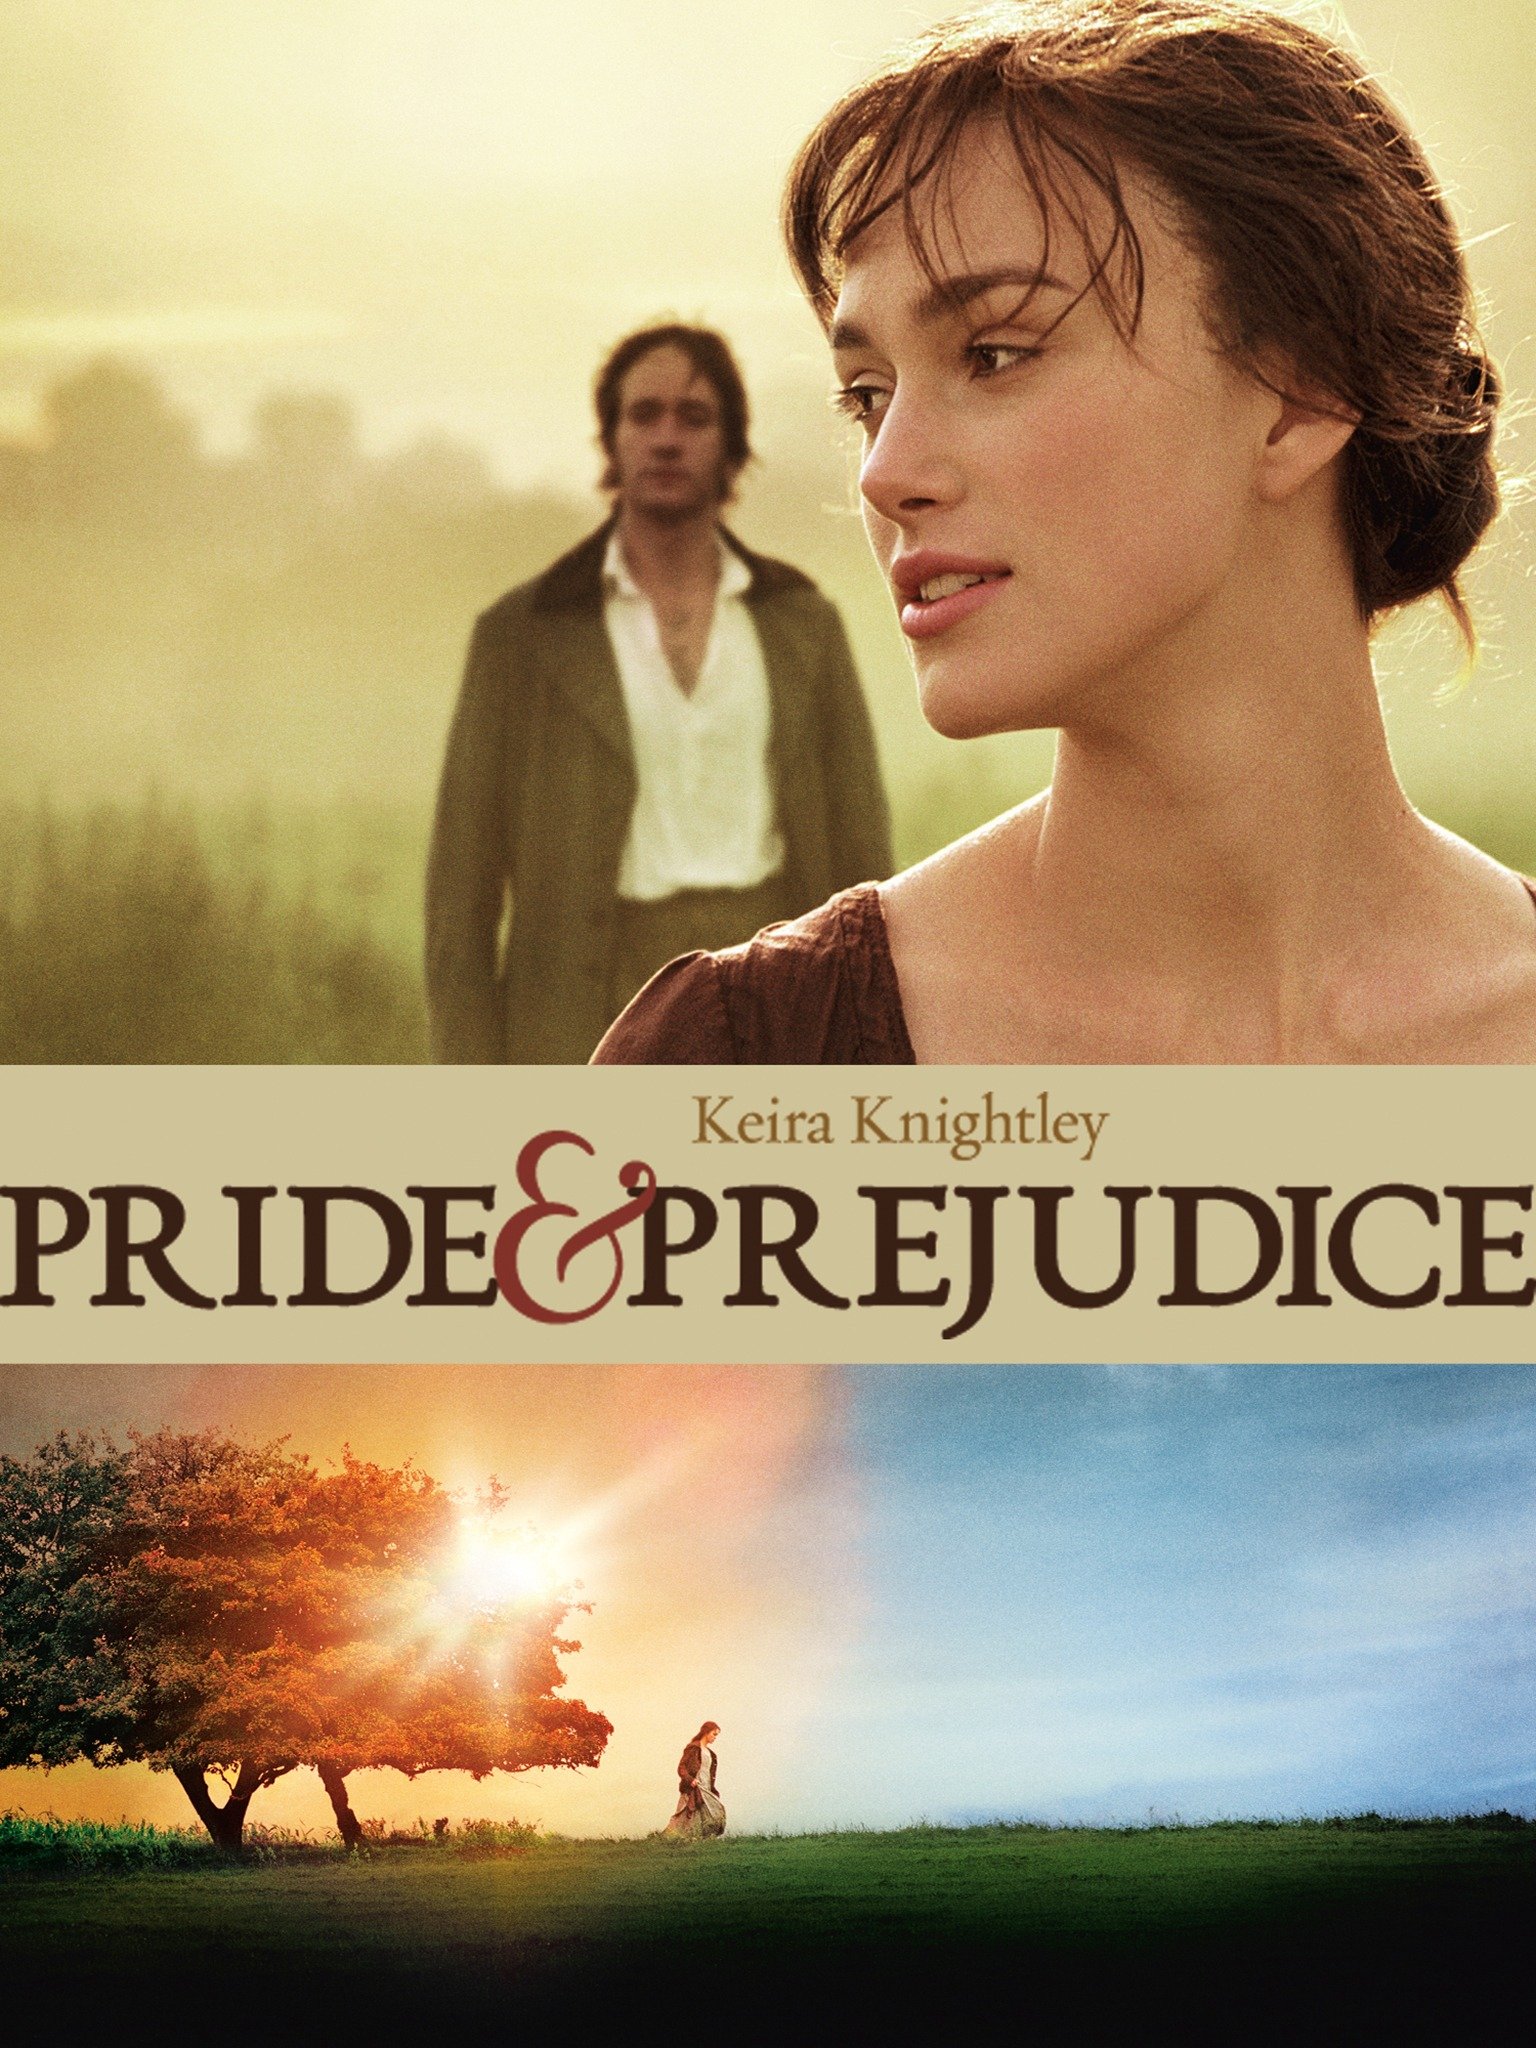 movie review pride and prejudice